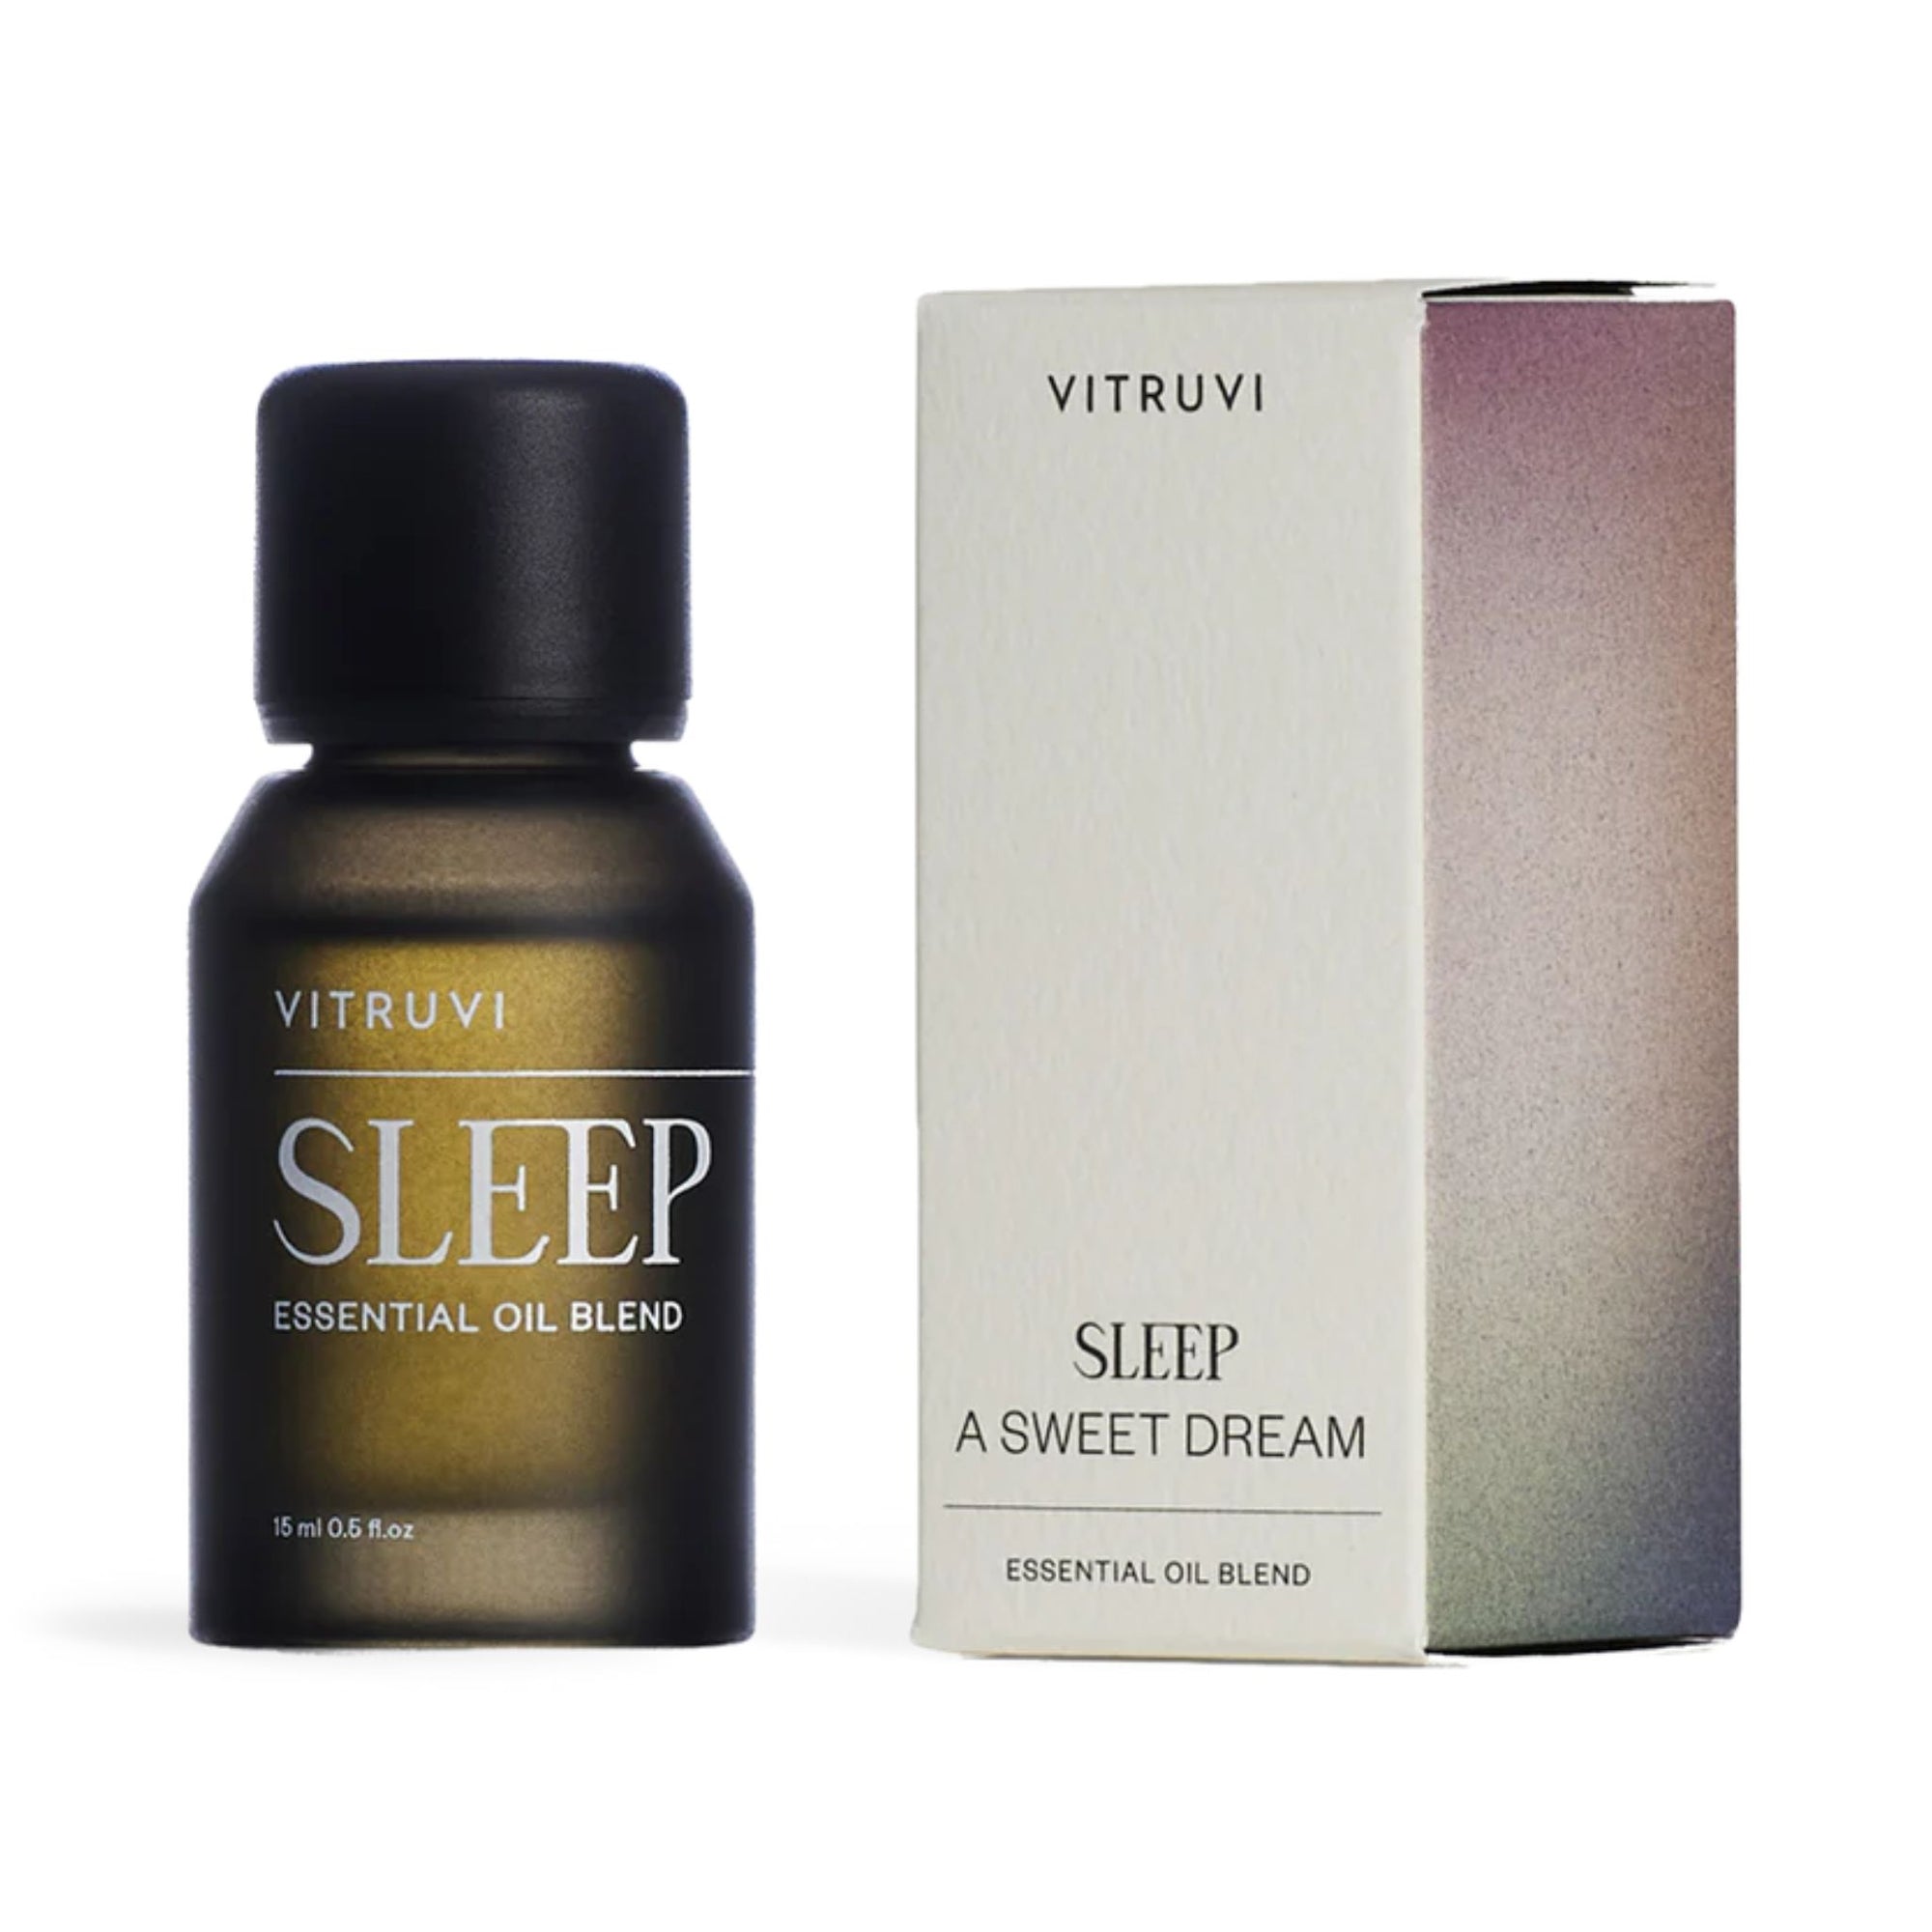 Vitruvi Sleep Diffuser Blend 15ml